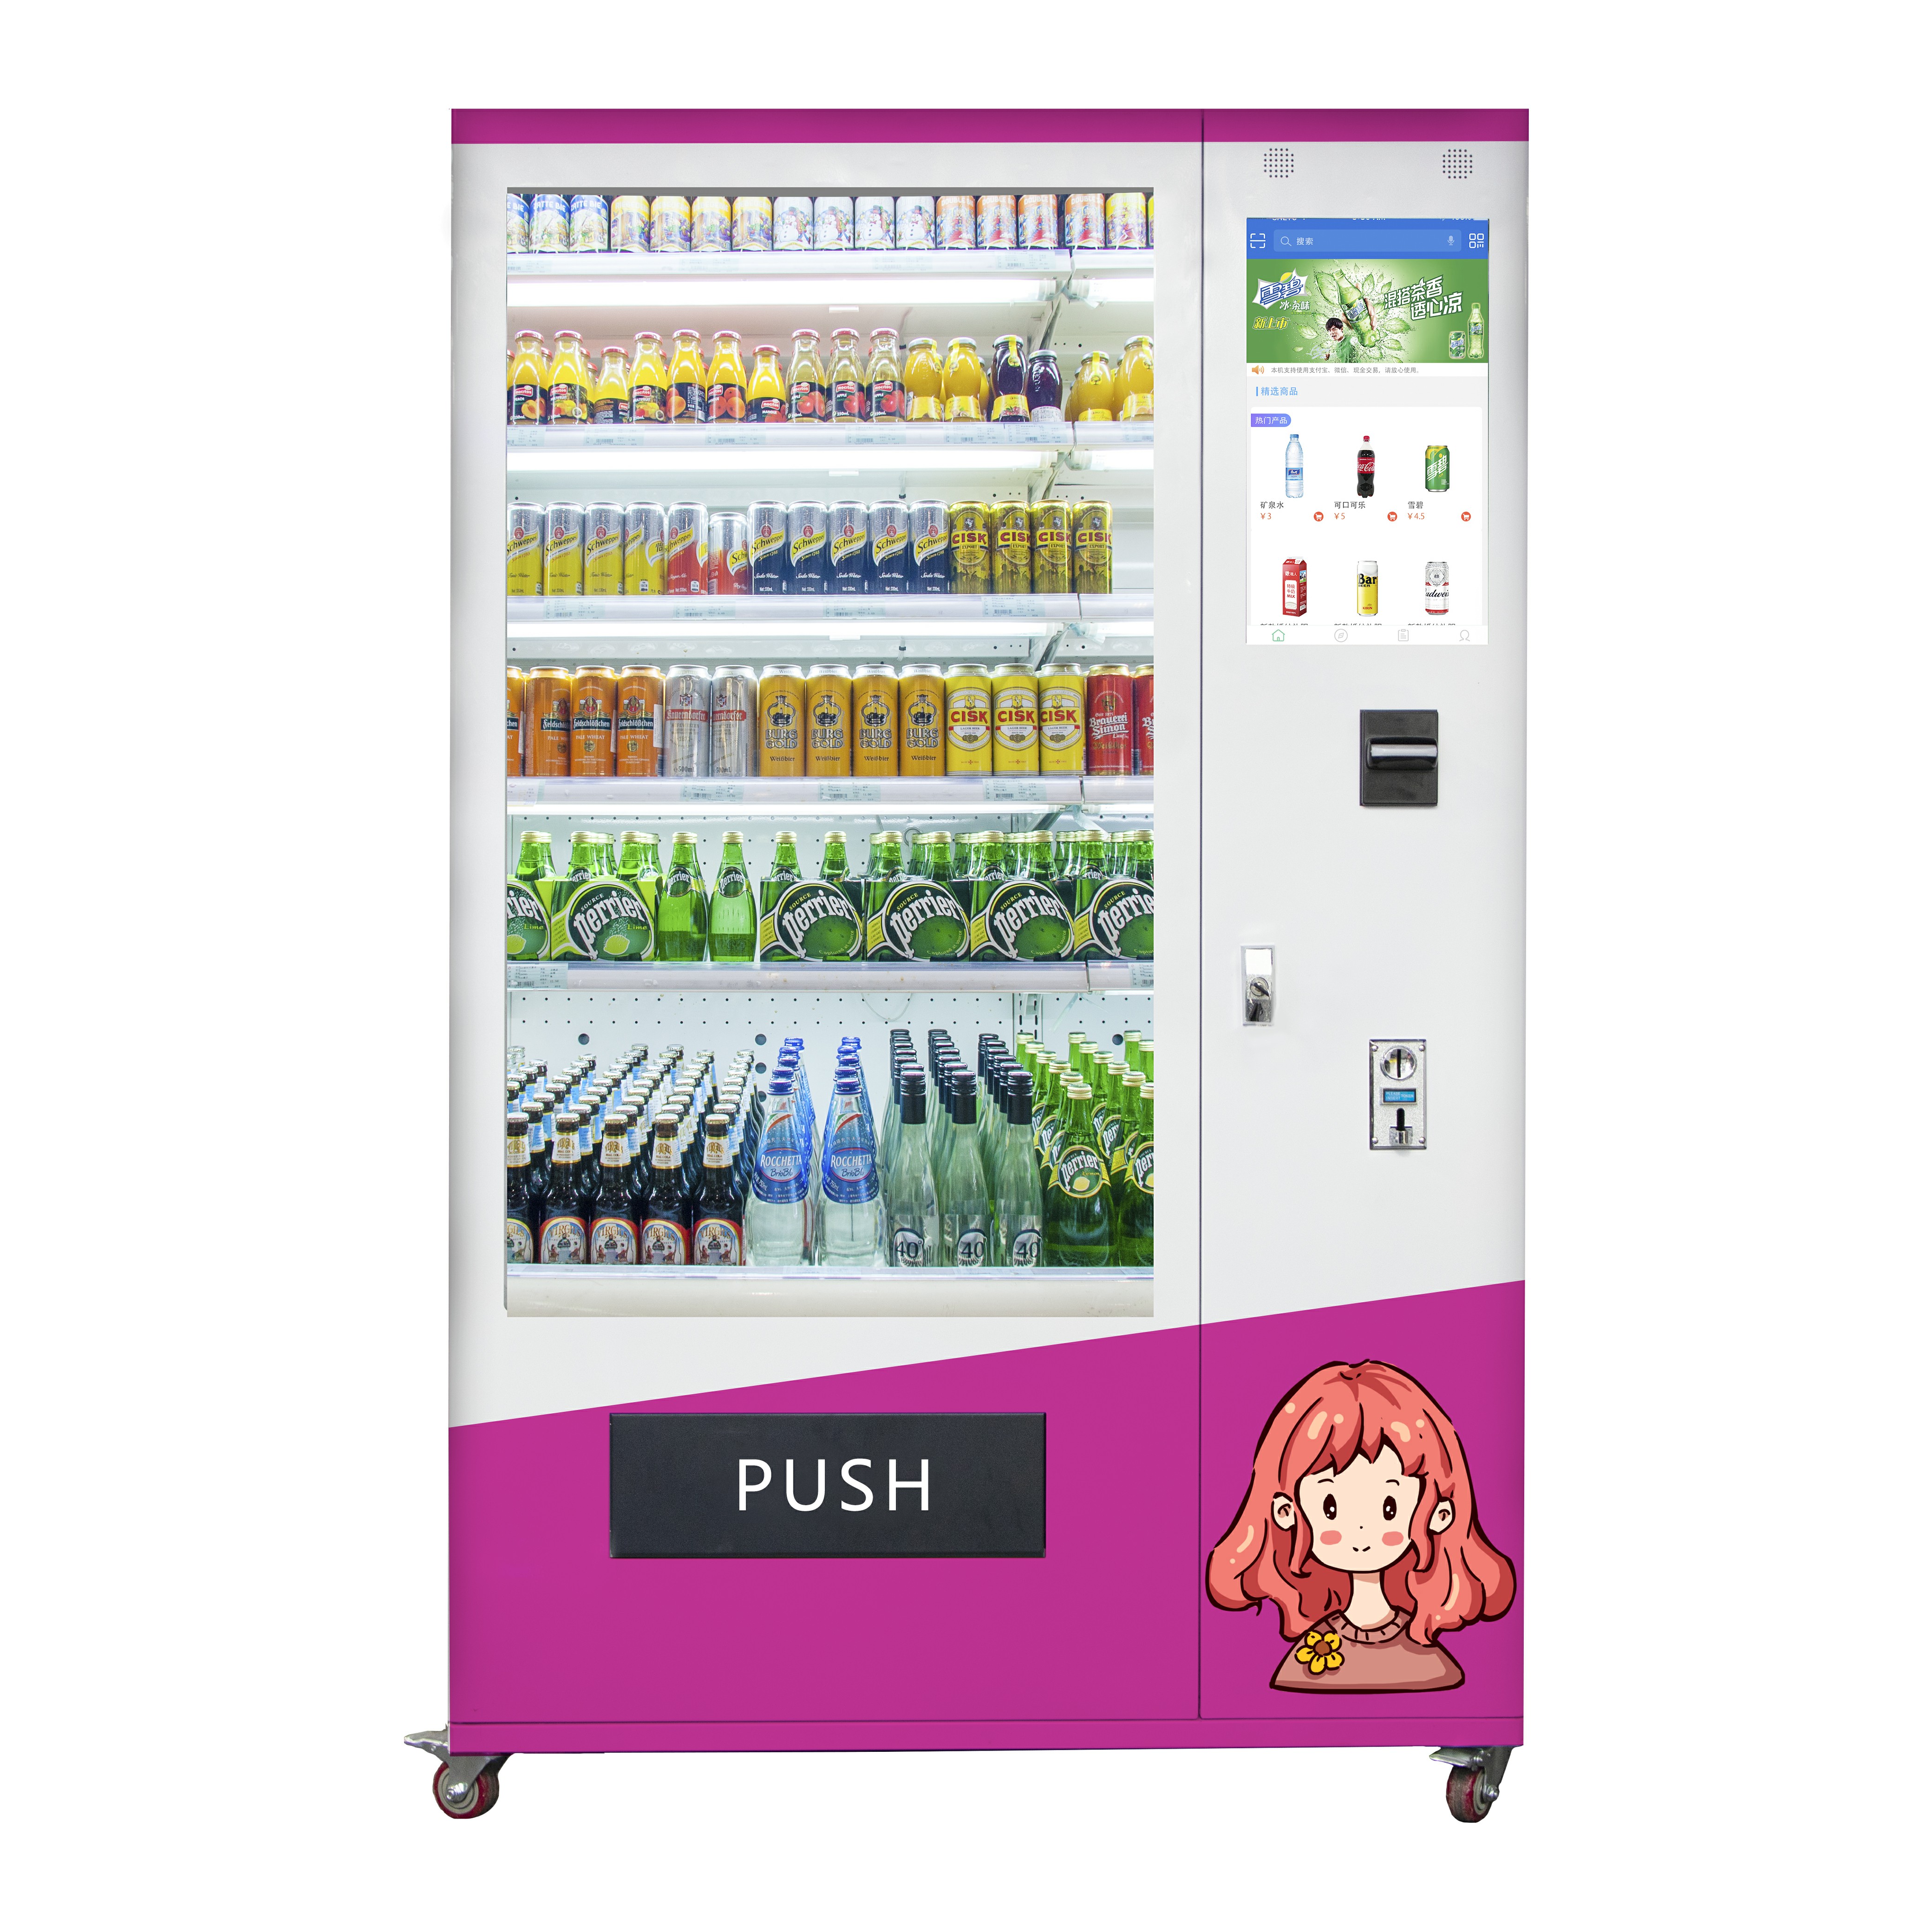 Automatic Vending Machine for sale, Purchase Vending Machine